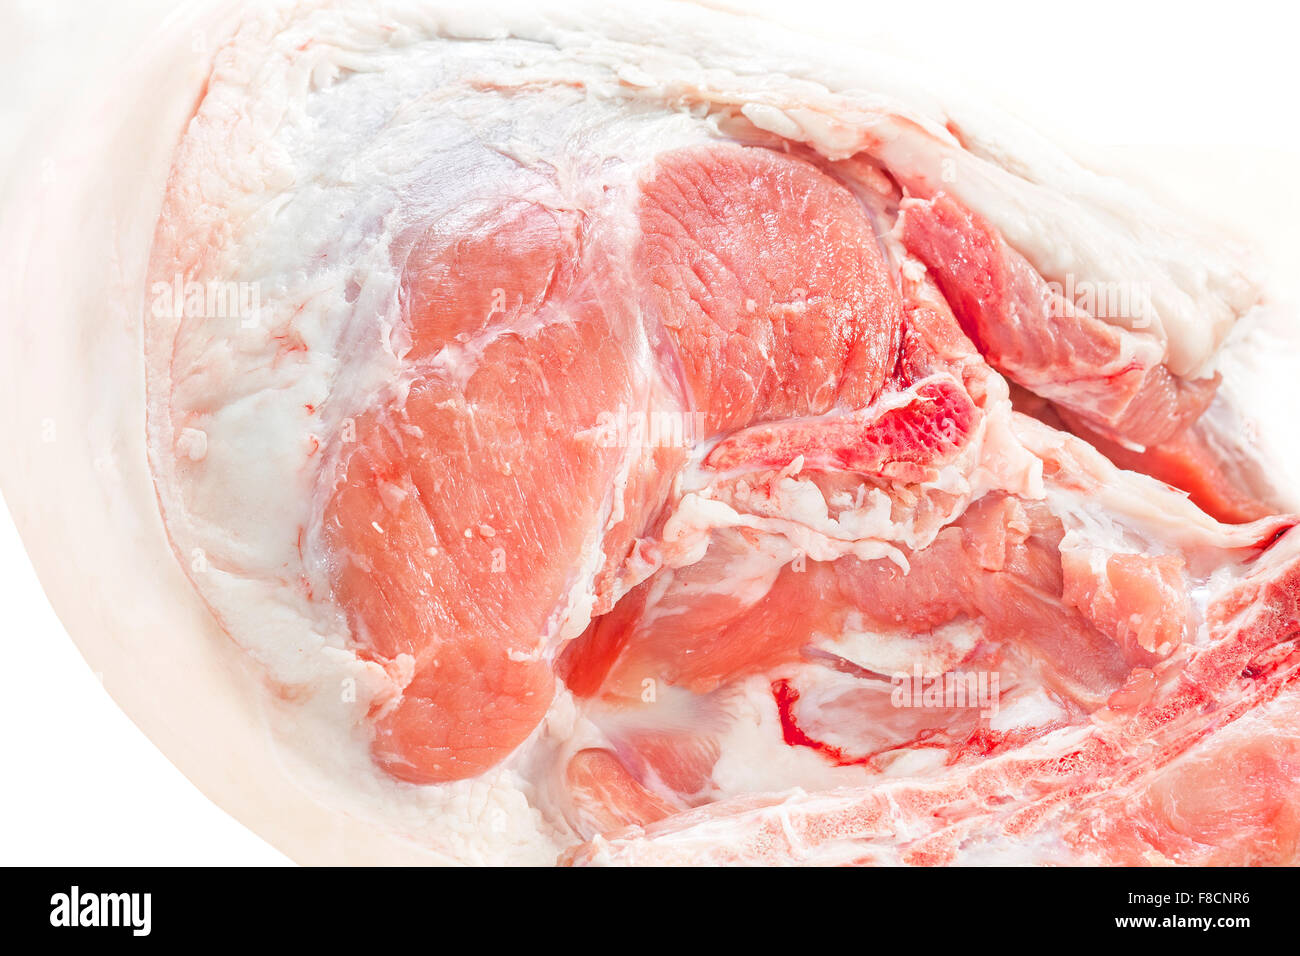 Pork leg fresh meat close up isolated on white. Stock Photo